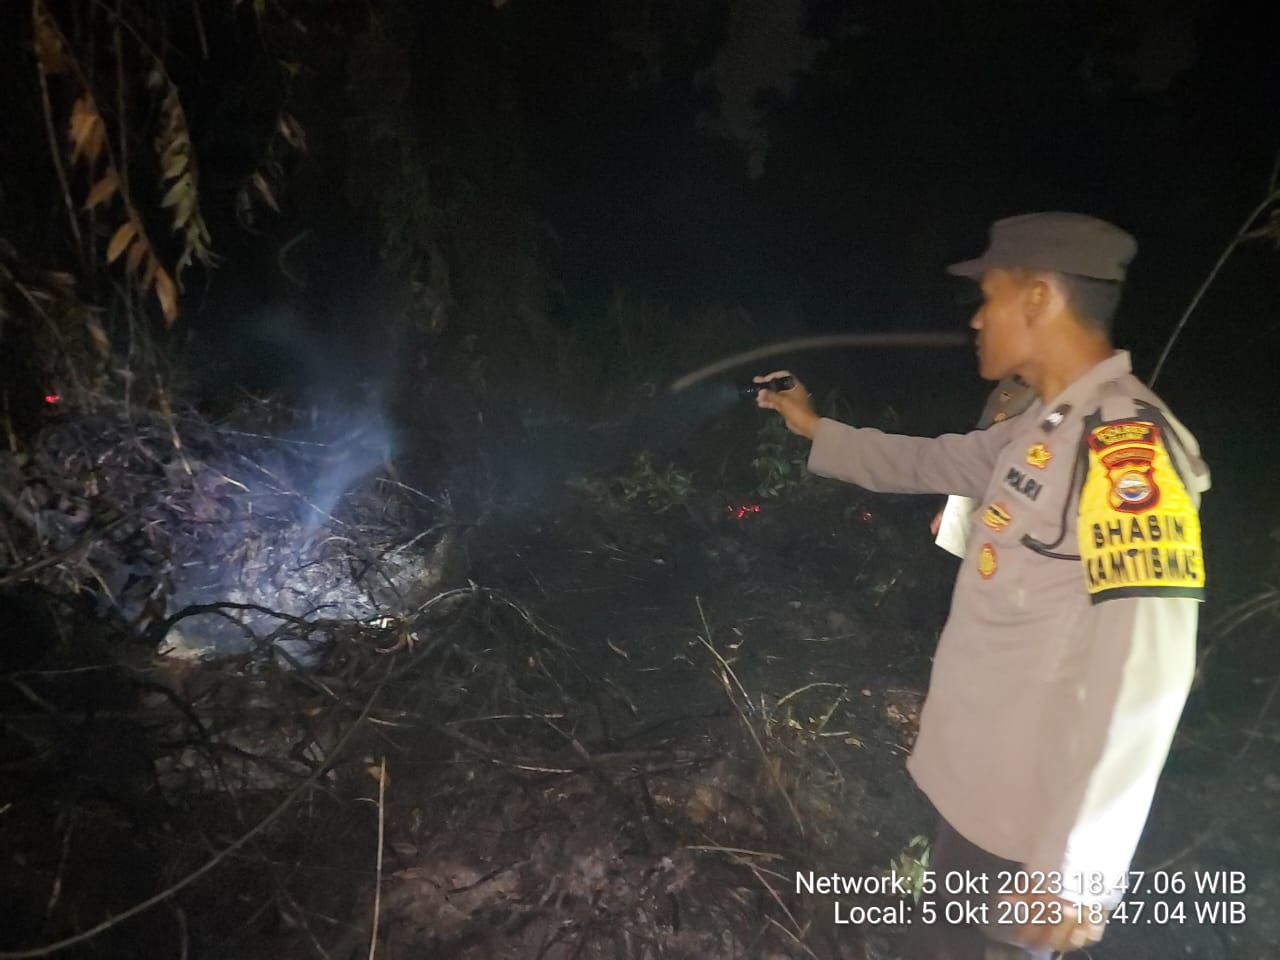 Kebakaran Lahan Kian Sering, Siang Tadi 2 Hektar Lahan Gambut Terbakar di Desa Jenggalu